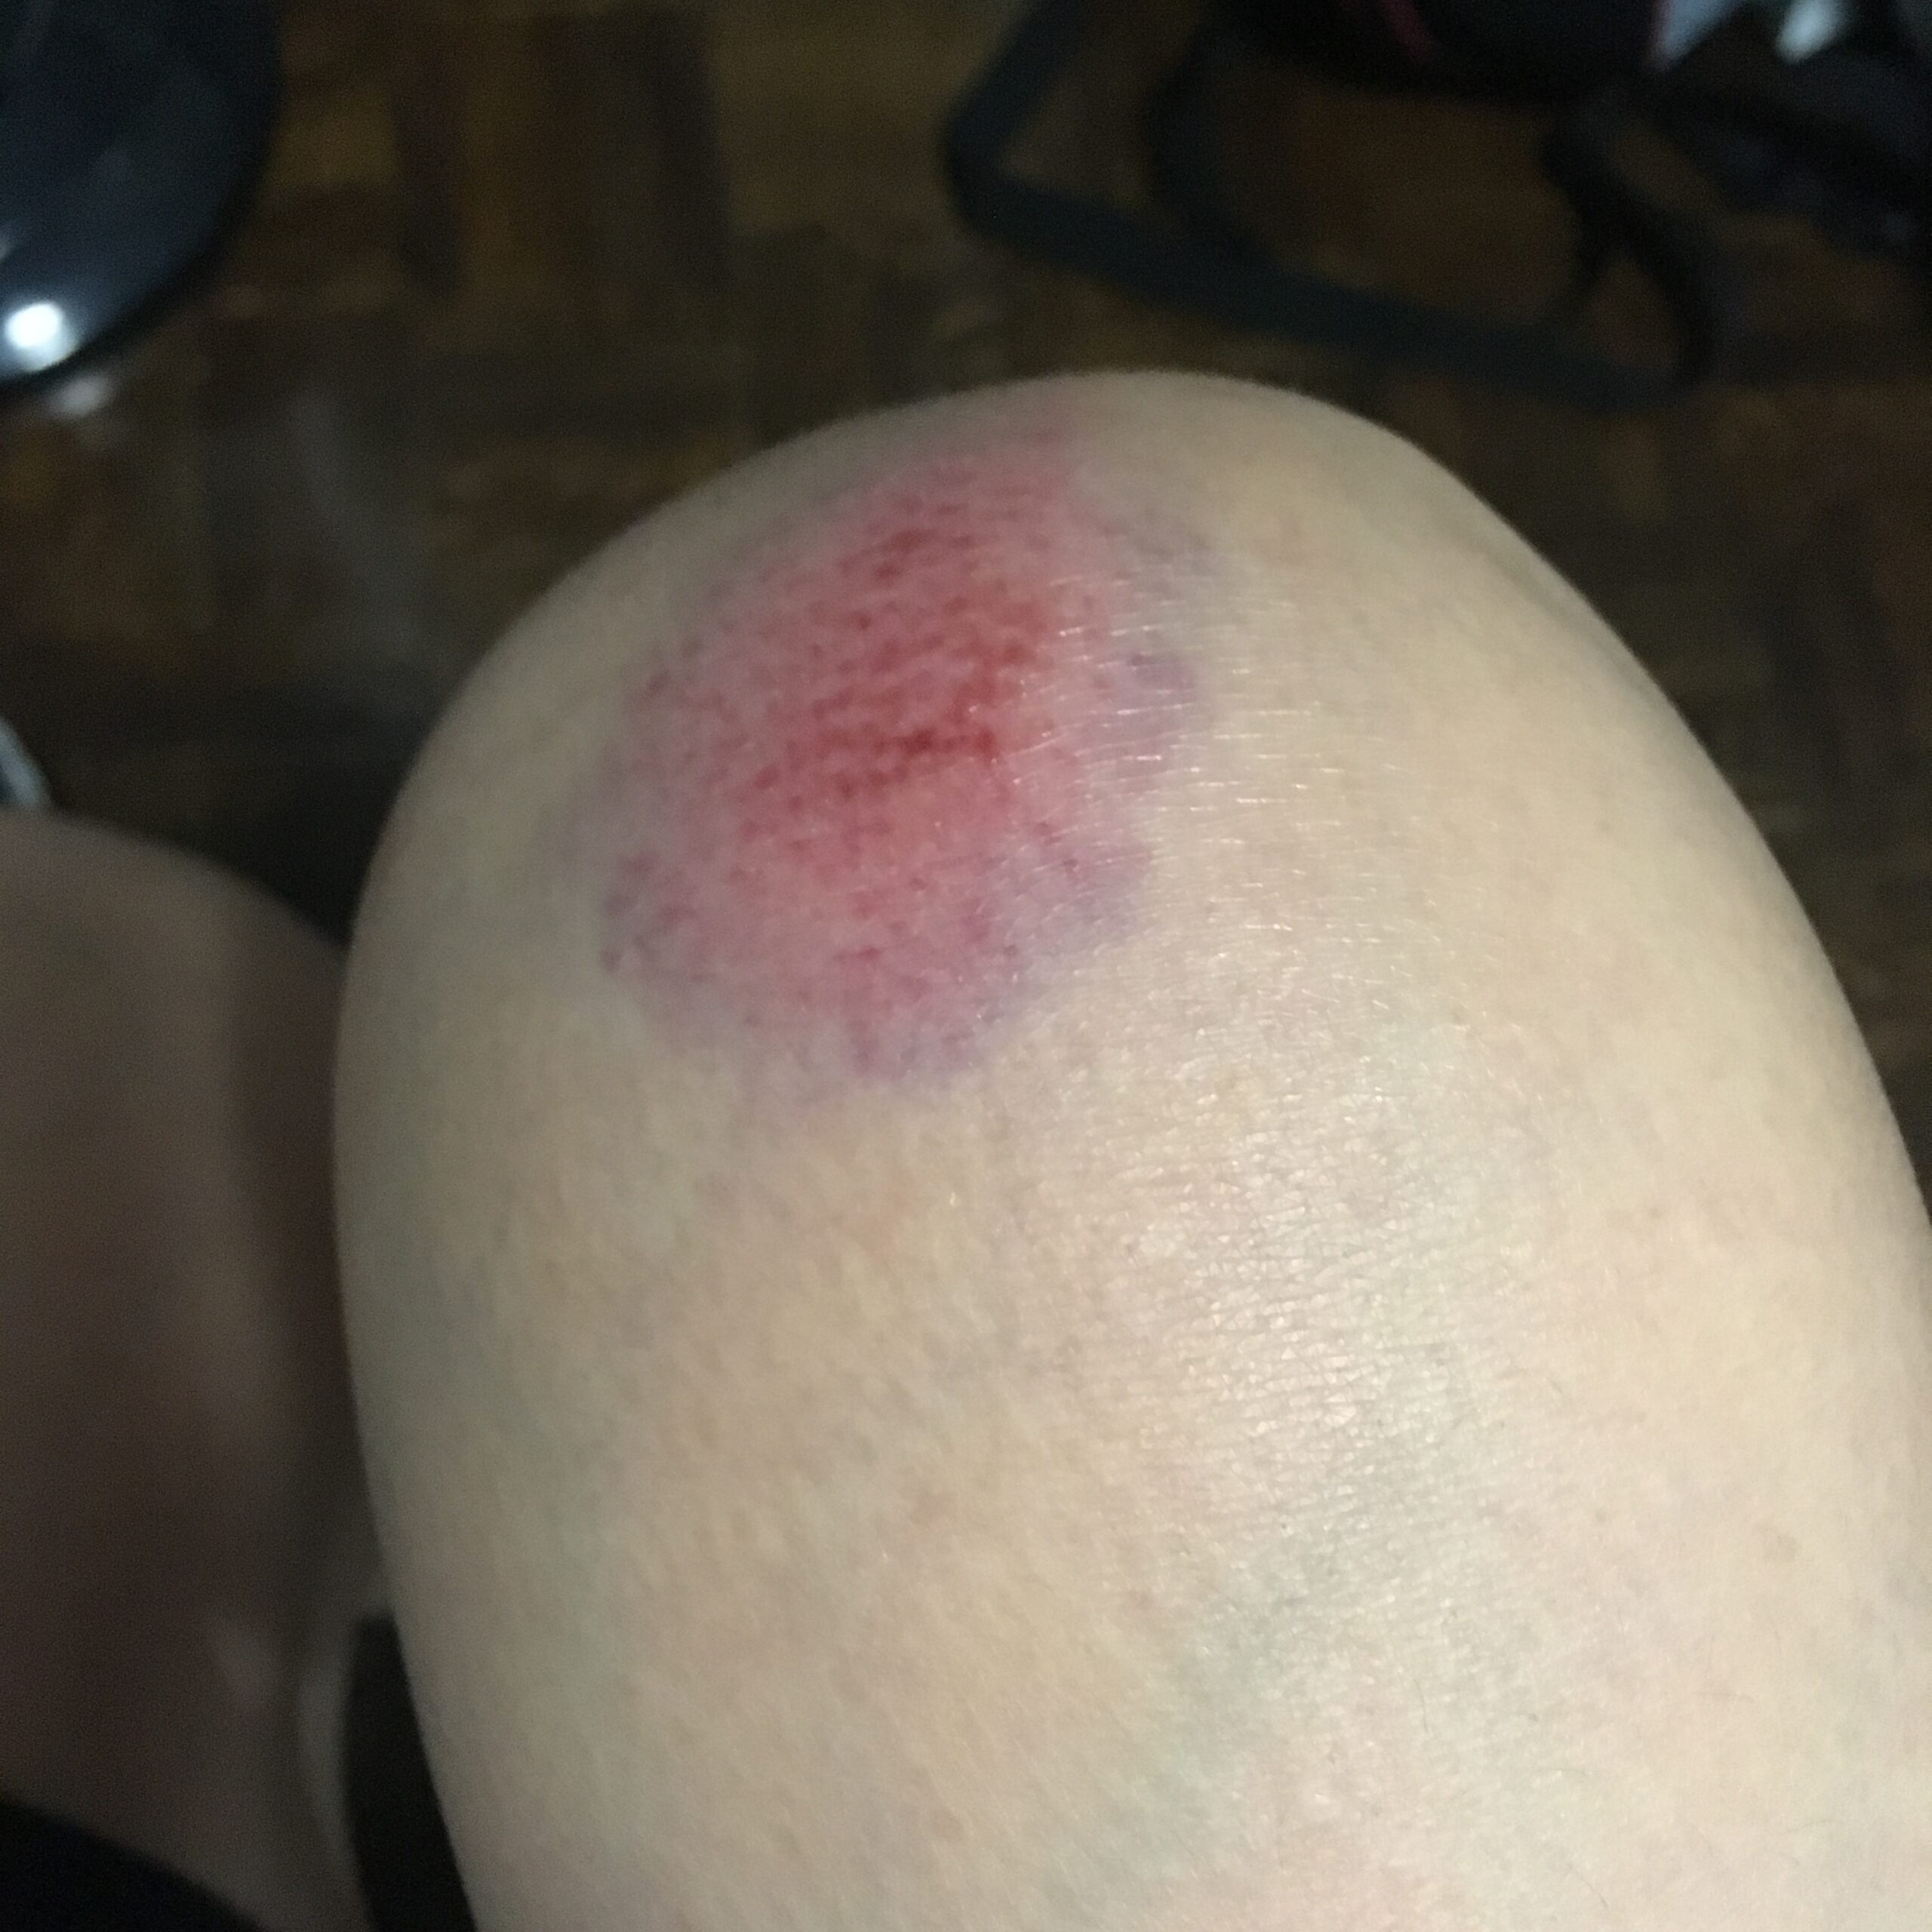 Close up image of bruised knee